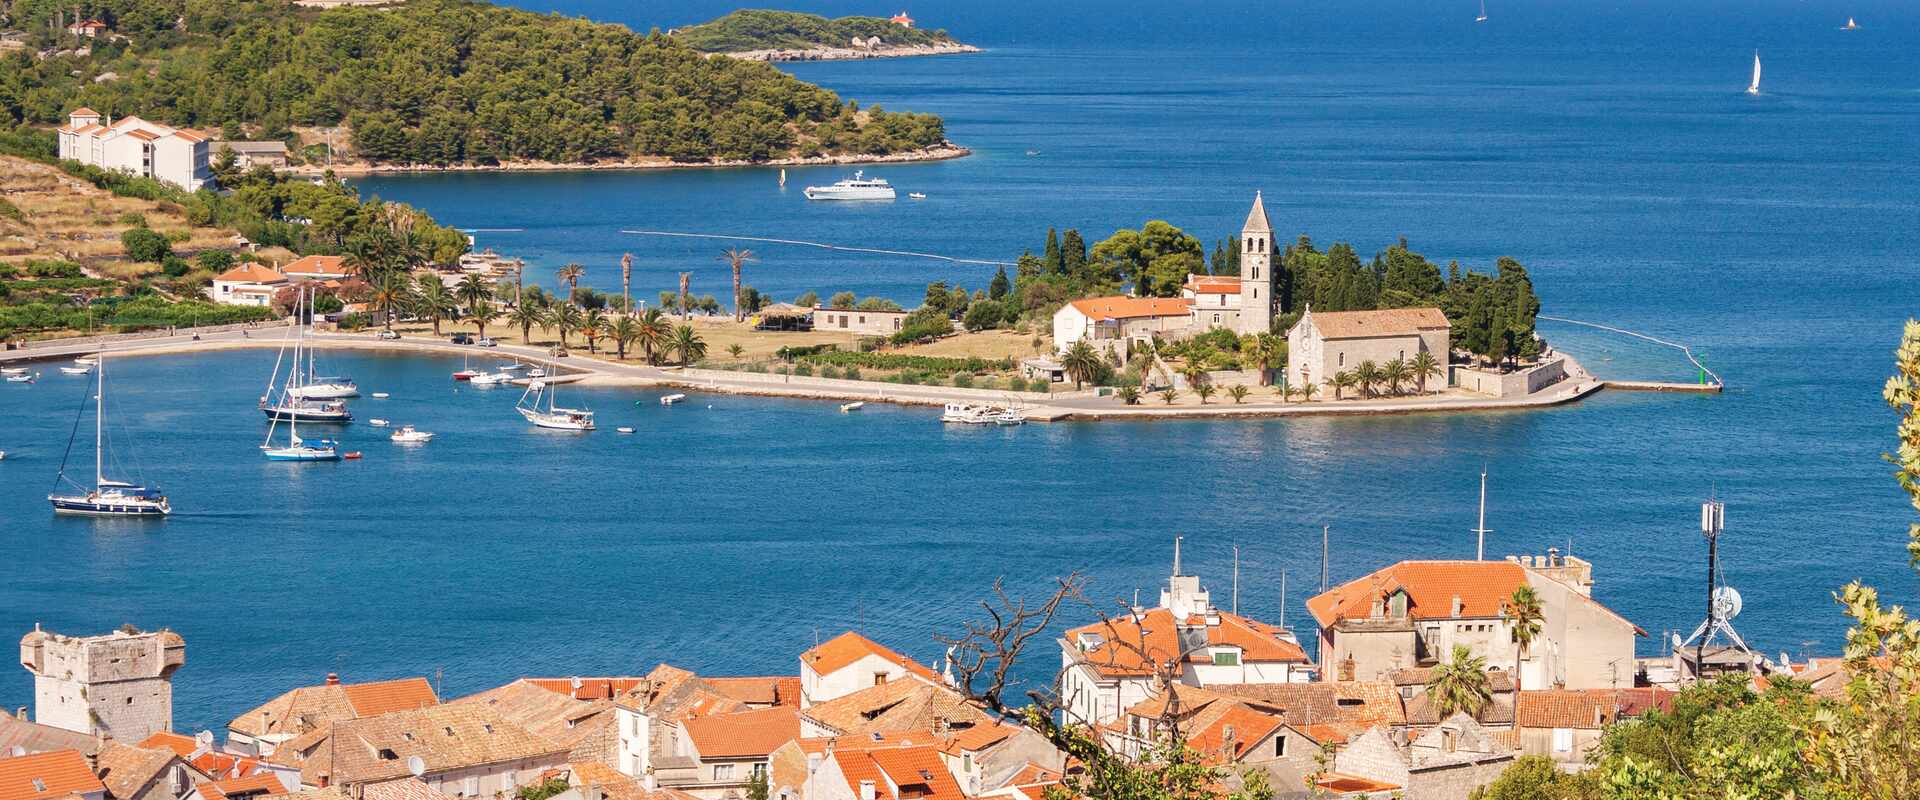 panorama harbour island vis, croatia